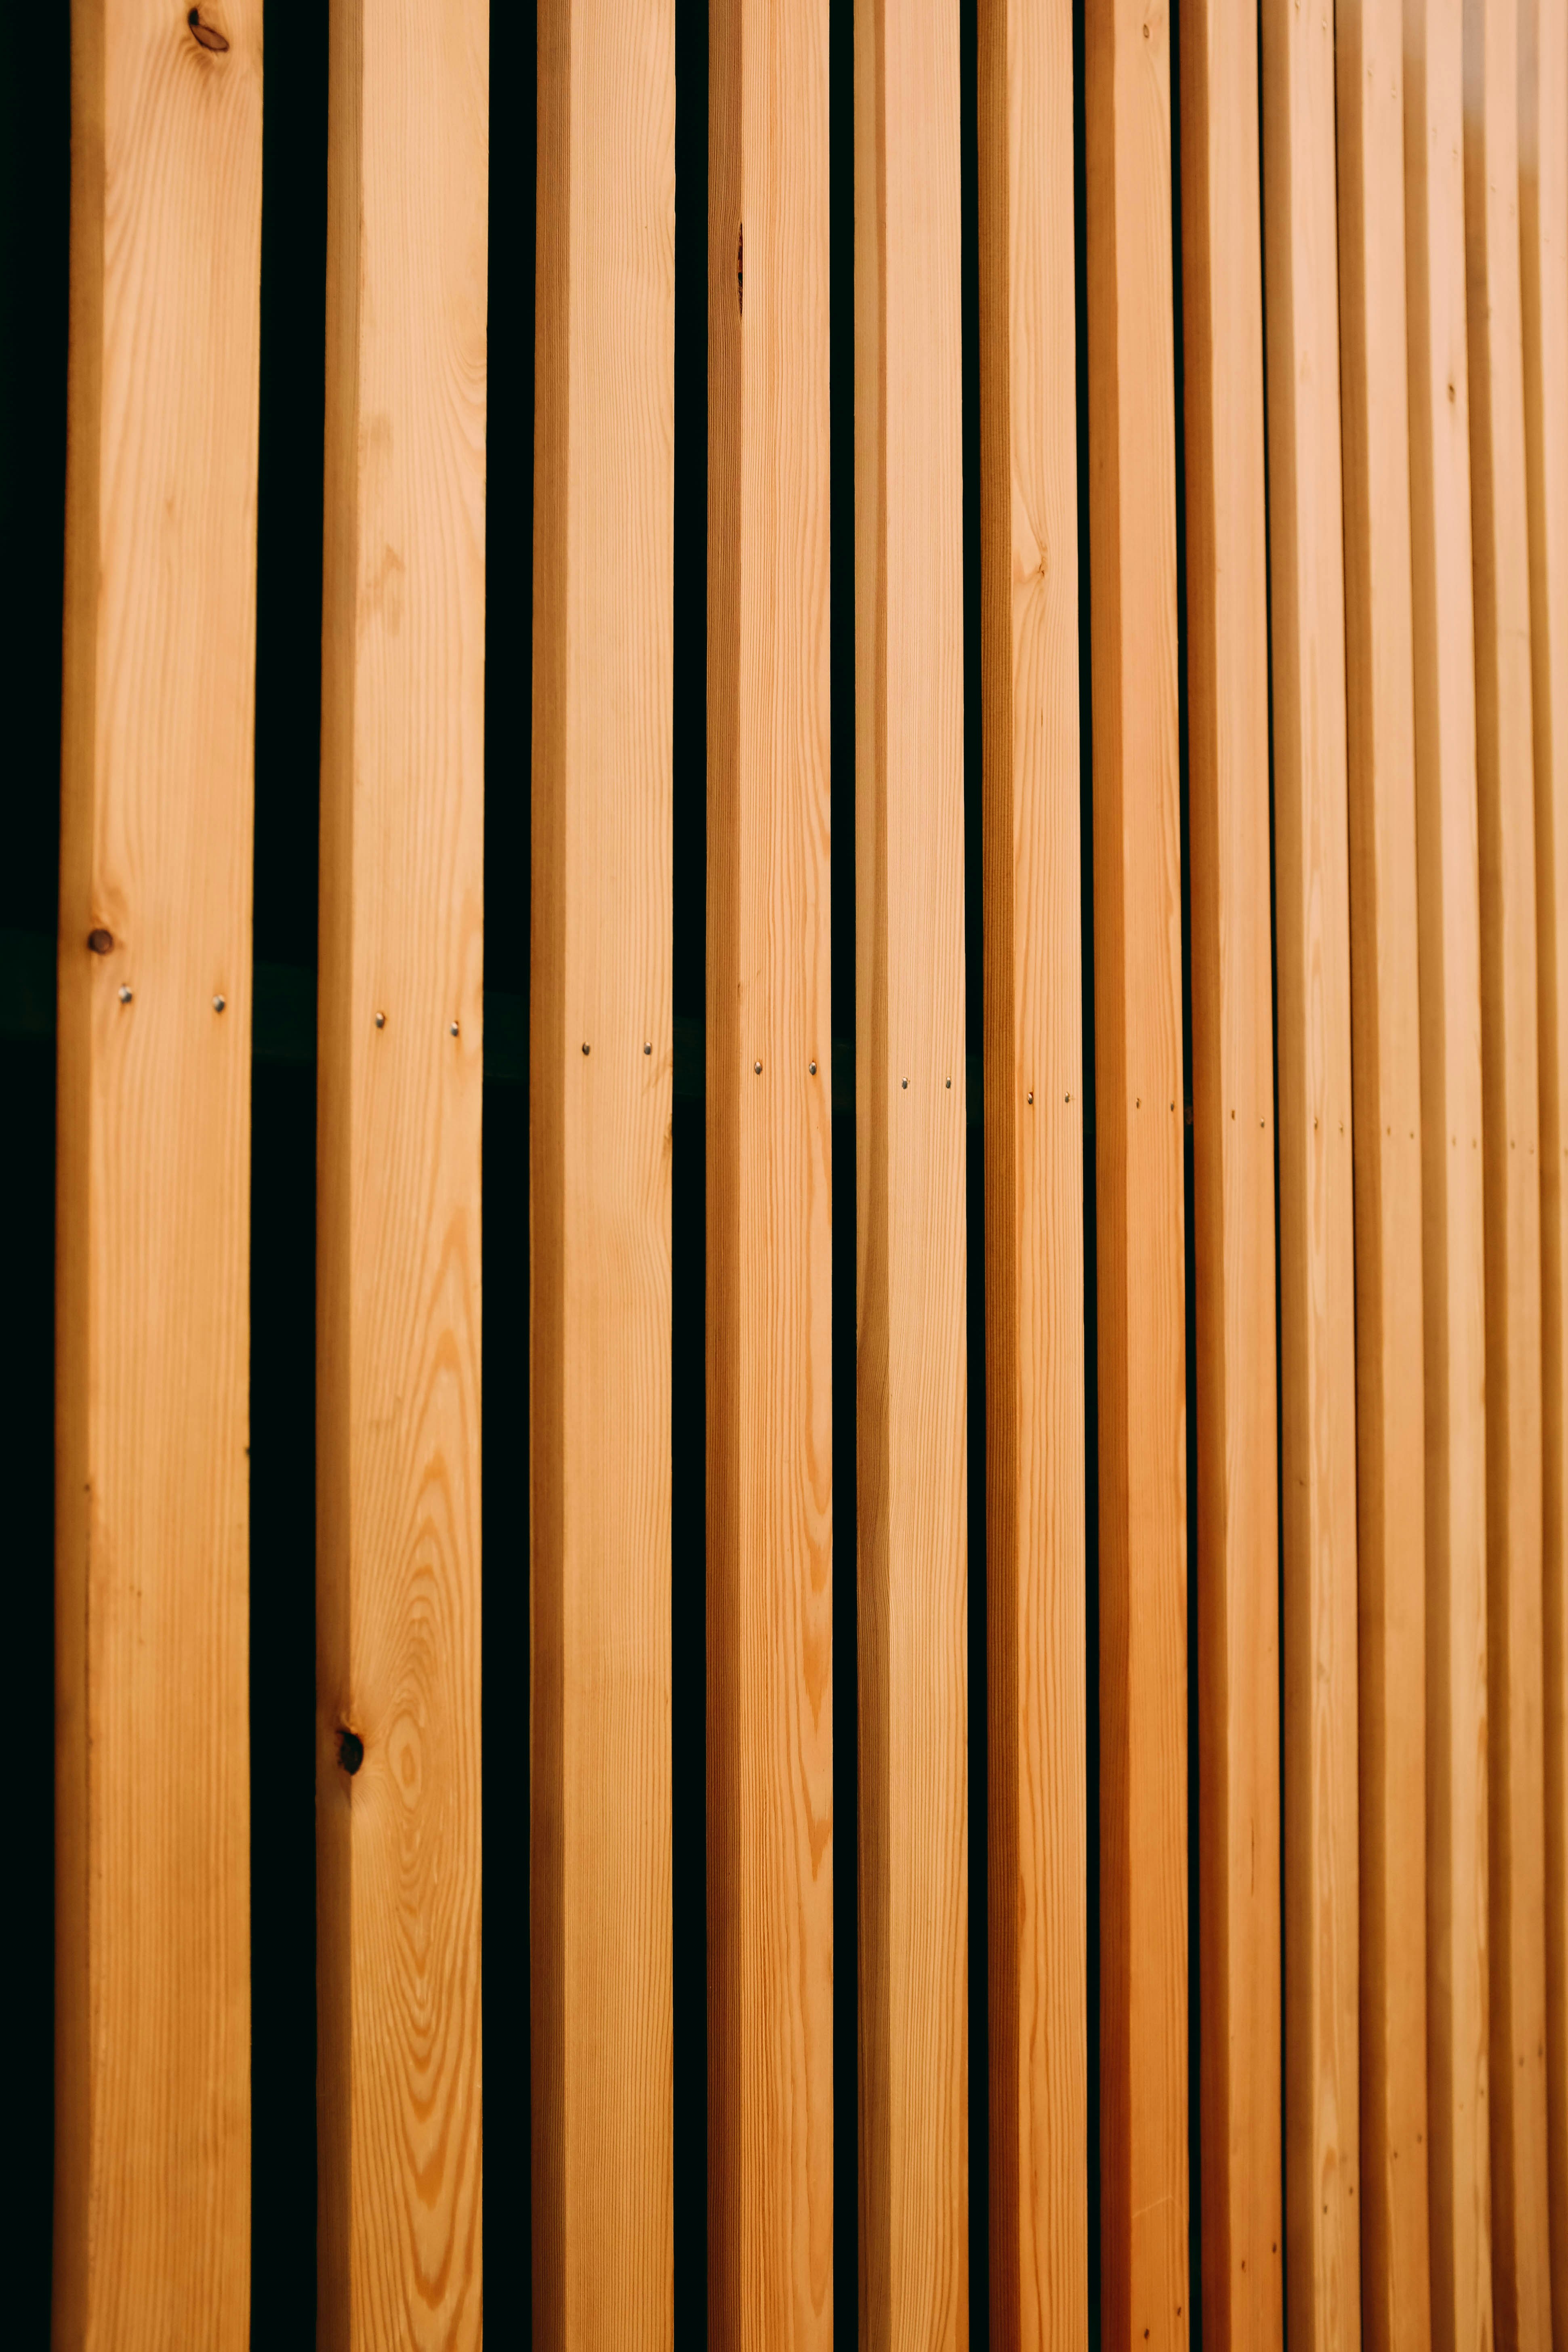 brown wooden panels